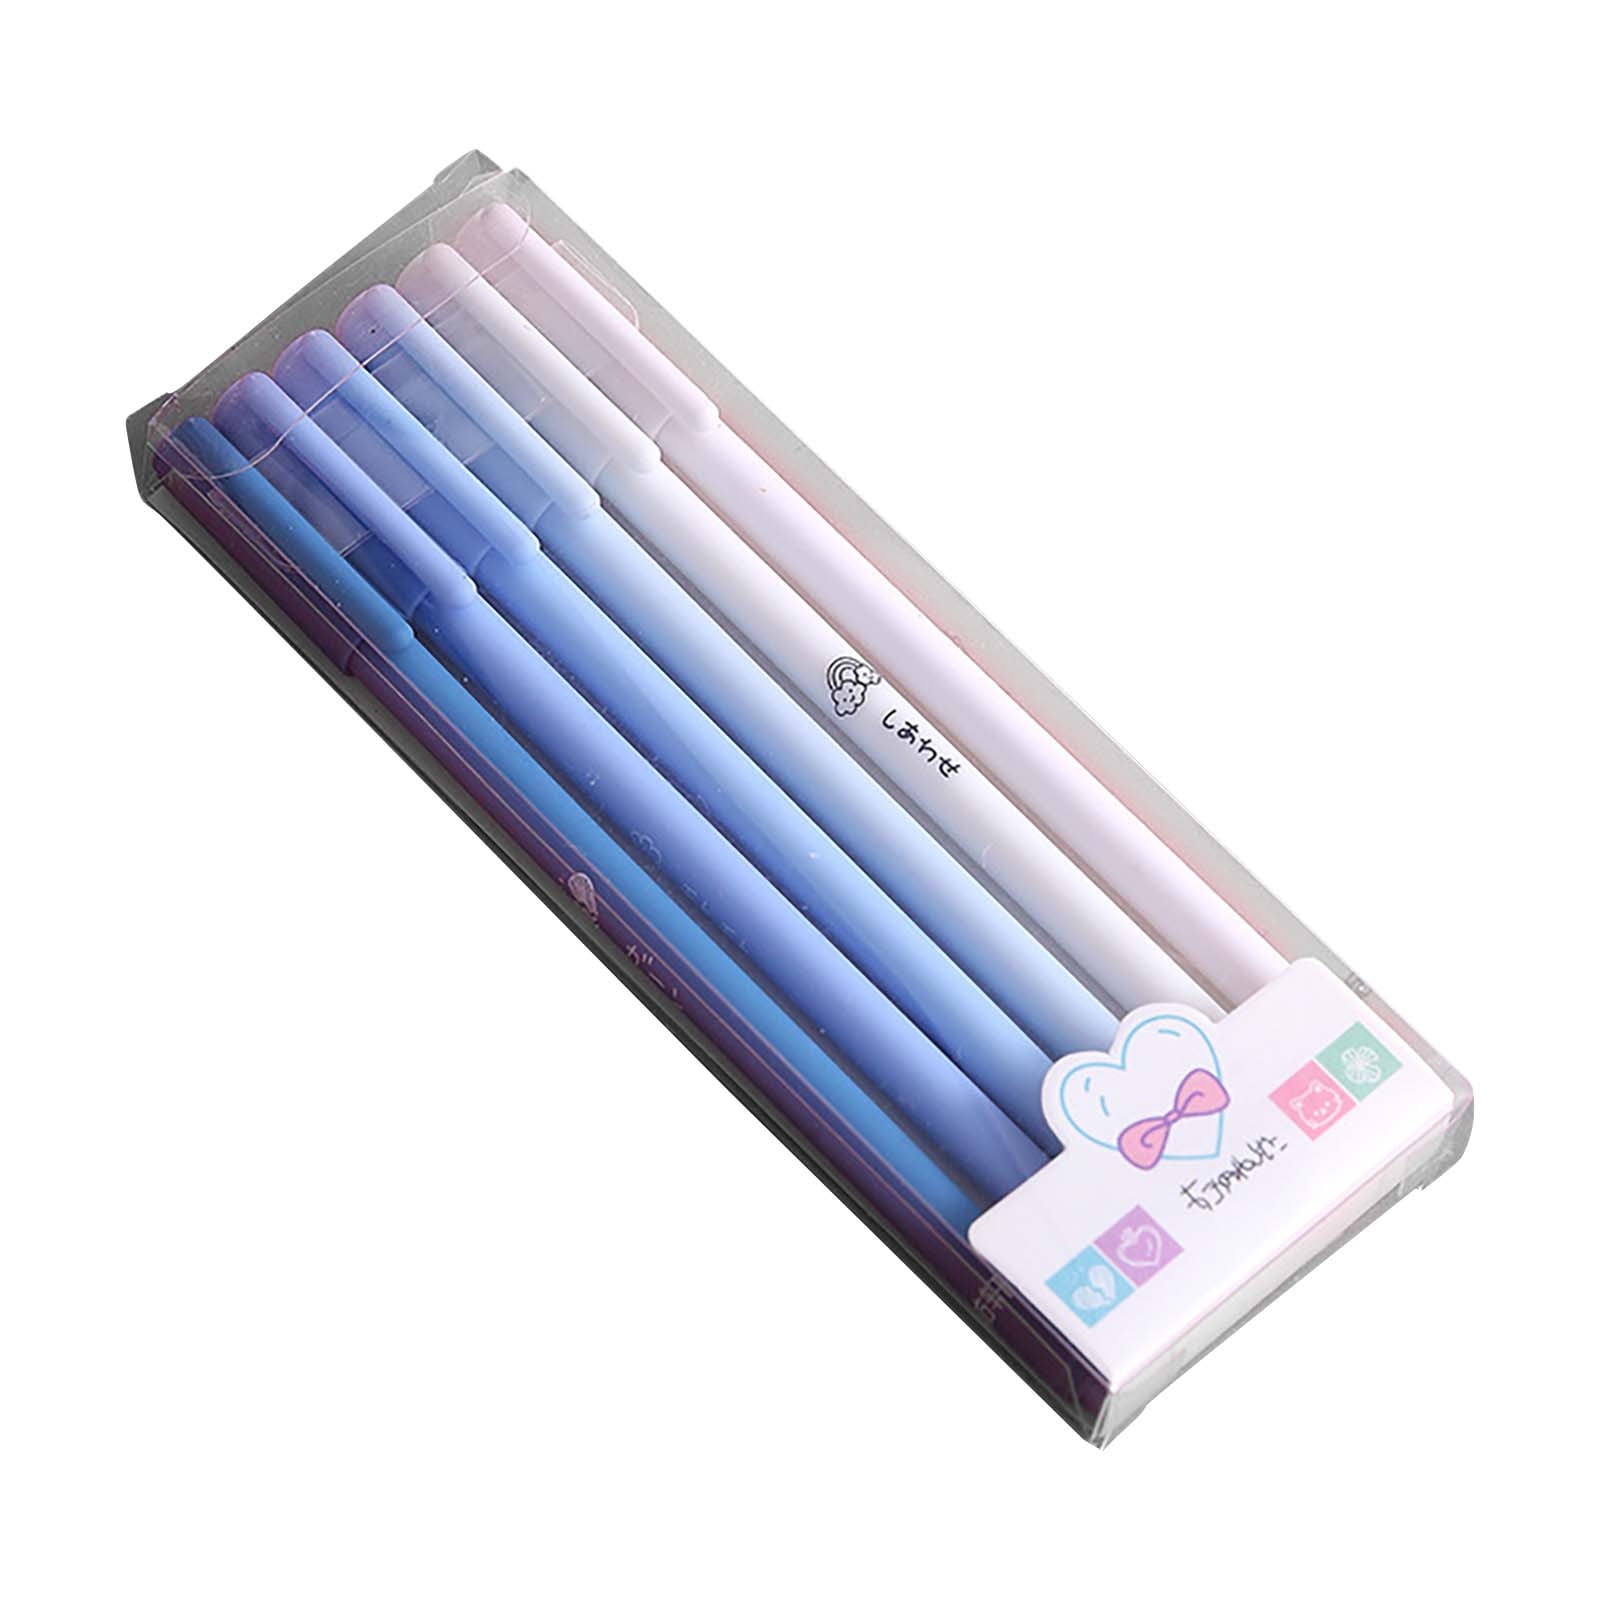 BAZIC Essence Gel Pen 1.0mm Glitter Color, Comfort Grip, (6/Pack